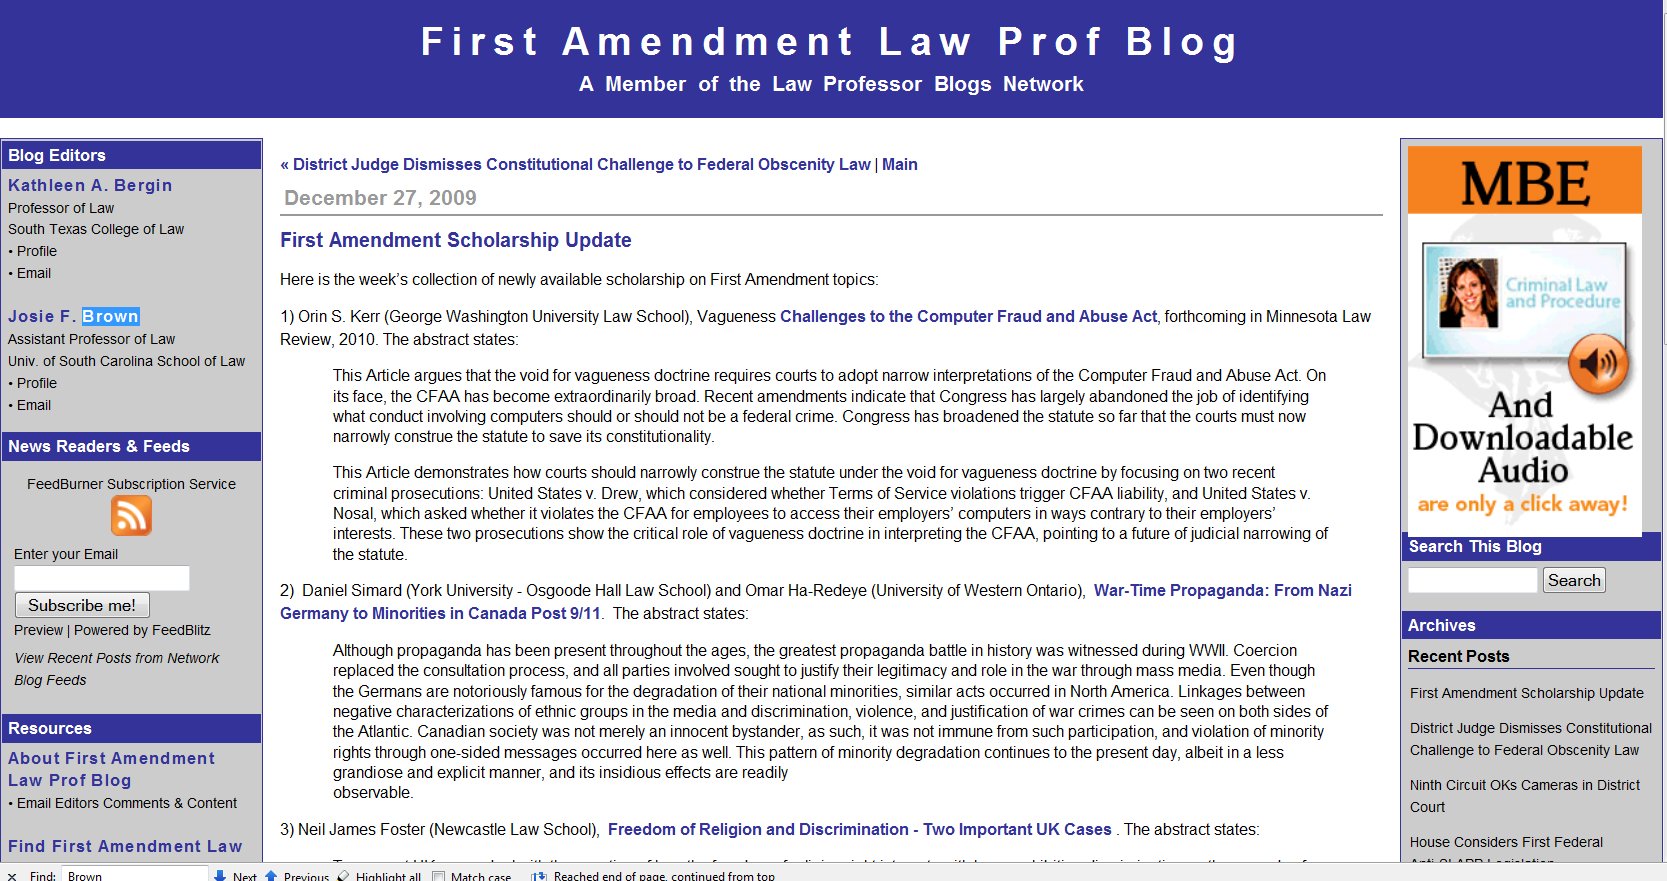 First Amendment Laws in Post-9/11 Canada